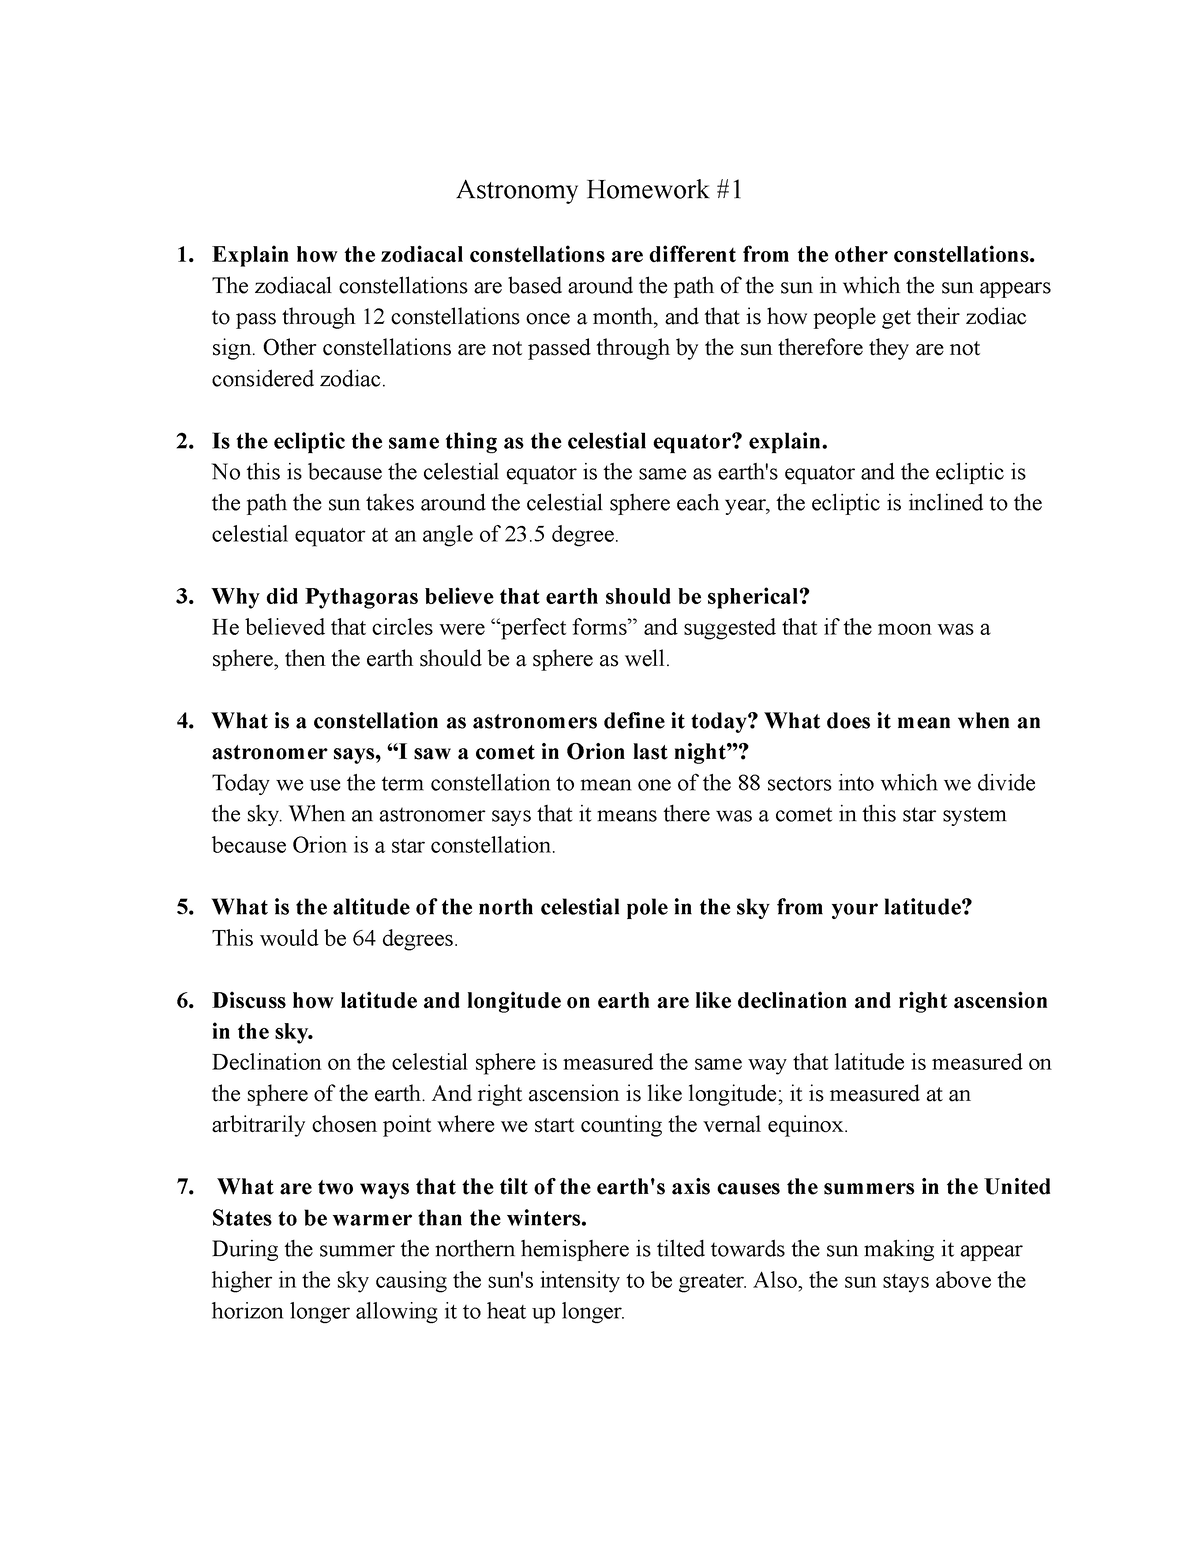 AST 1002 homework #1 - Astronomy Homework 1. Explain how the zodiacal ...